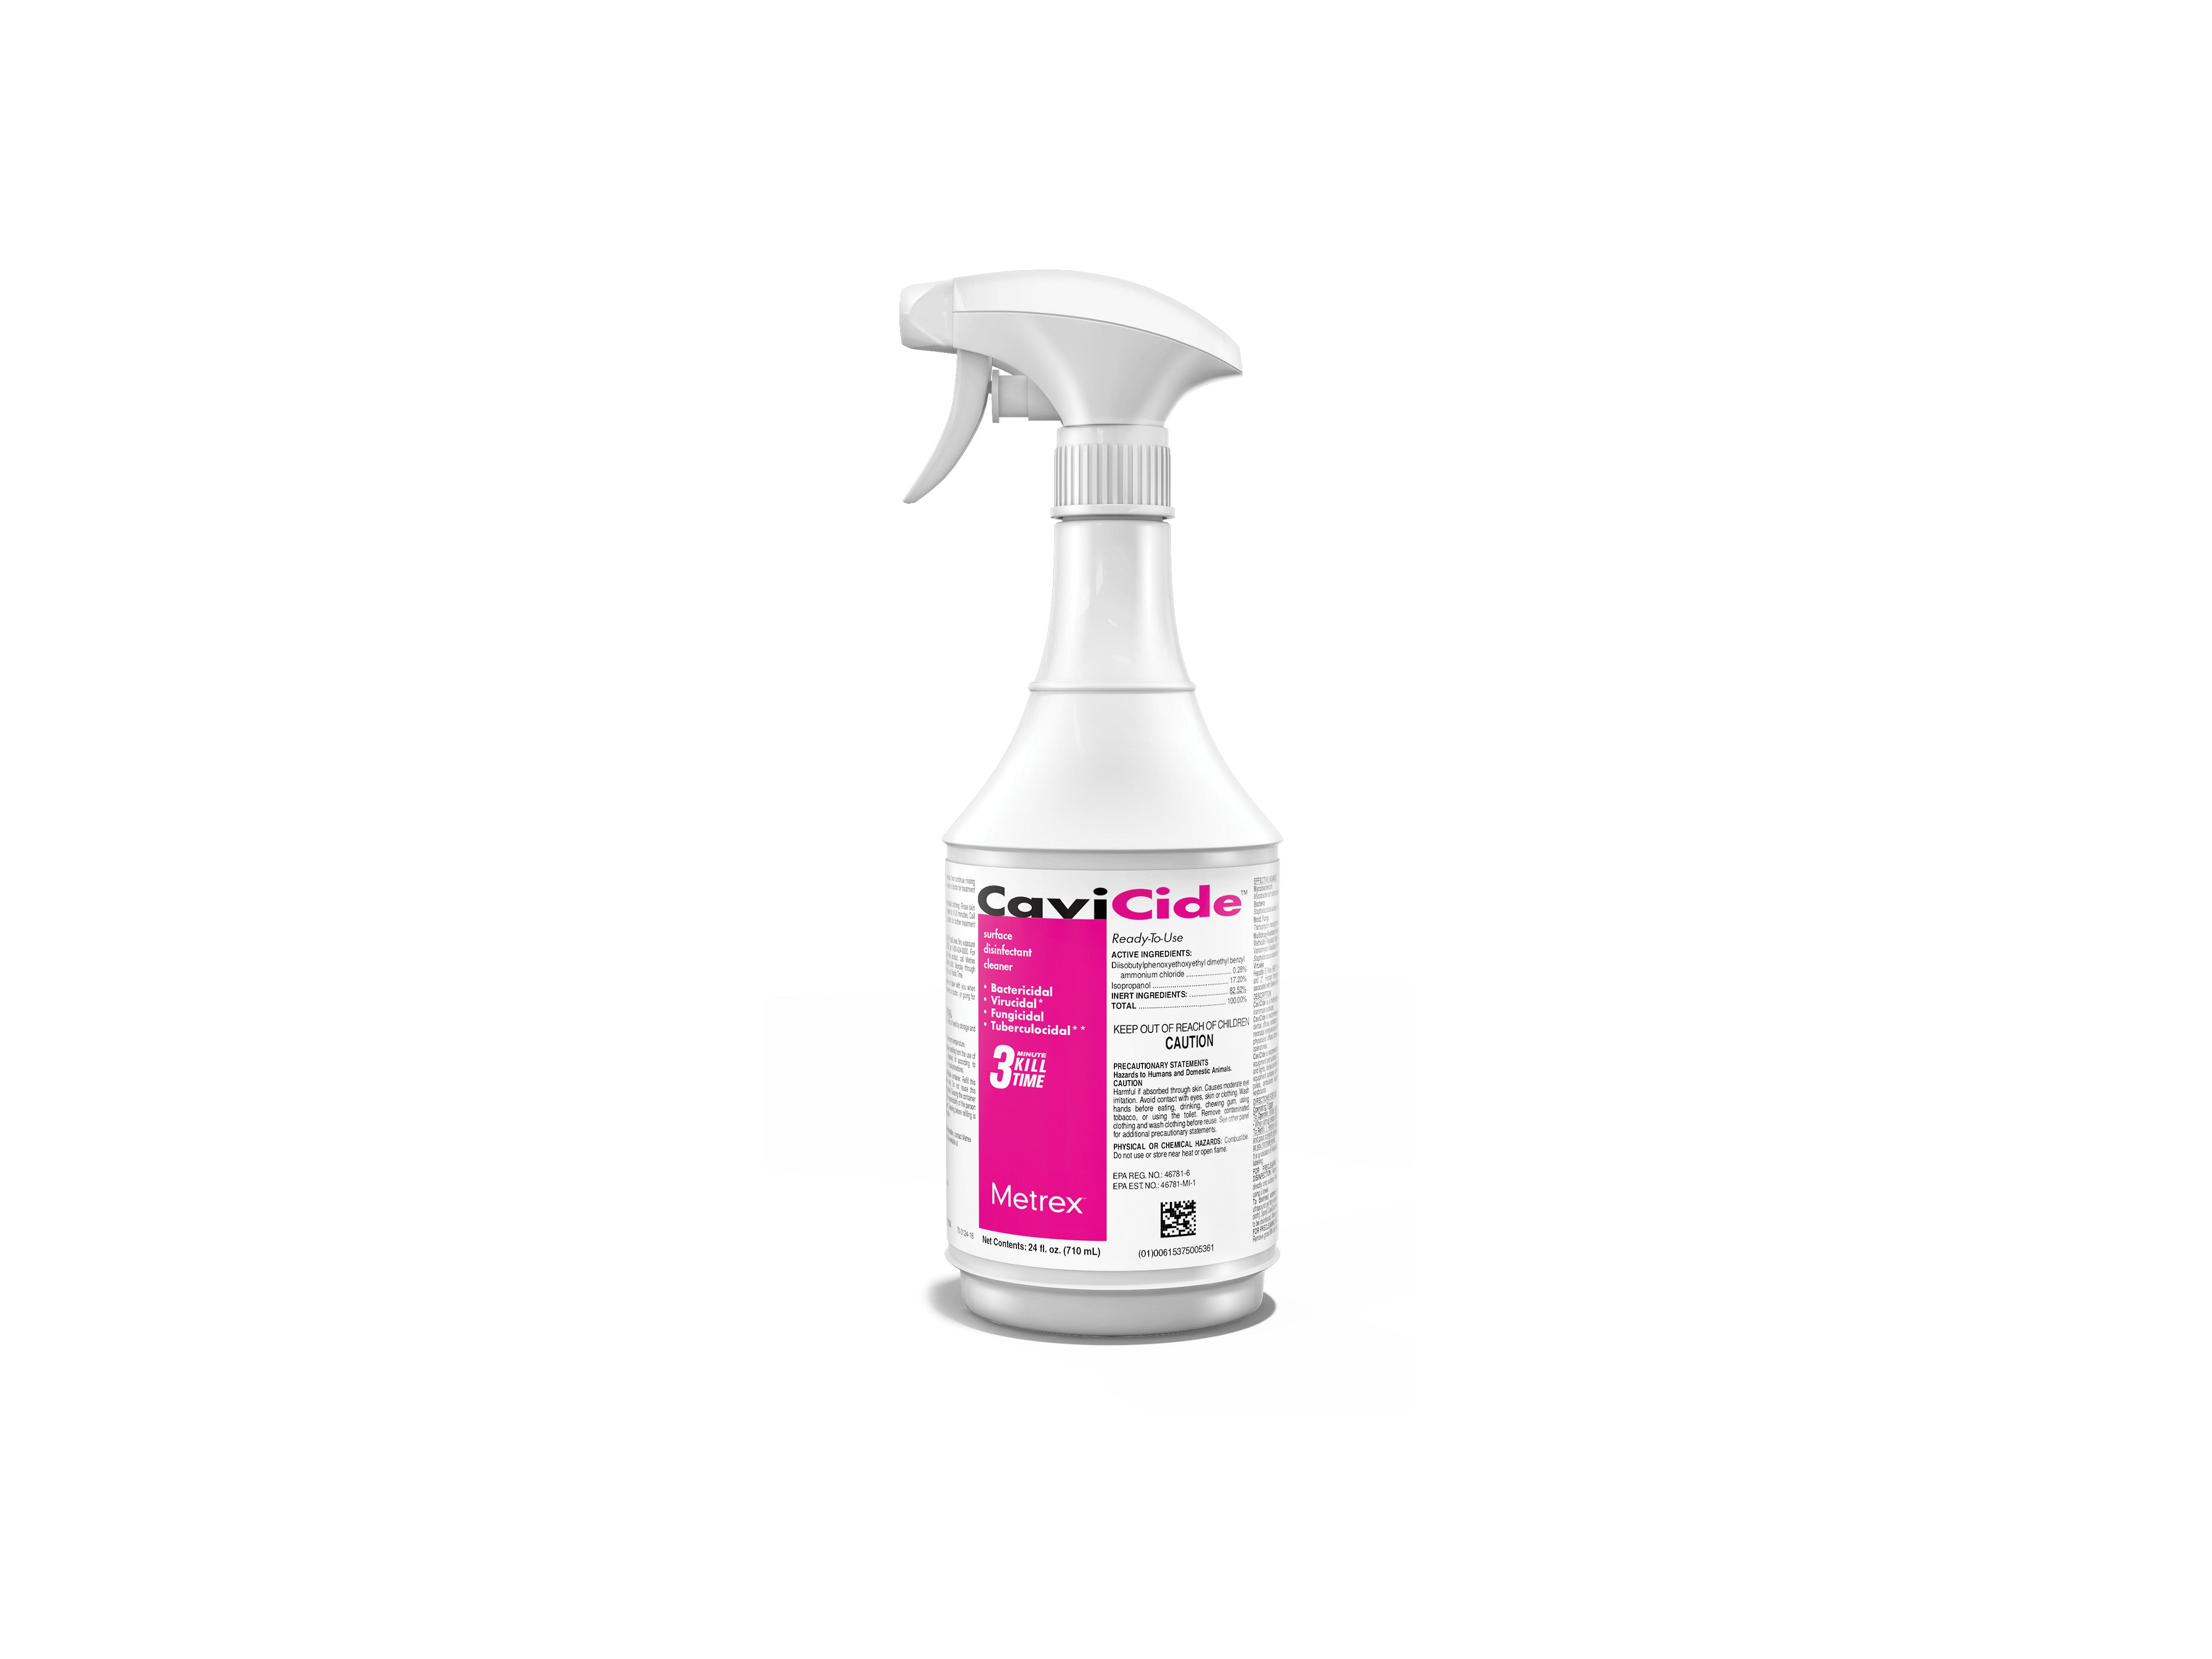 Metrex CaviCide Surface Disinfectant